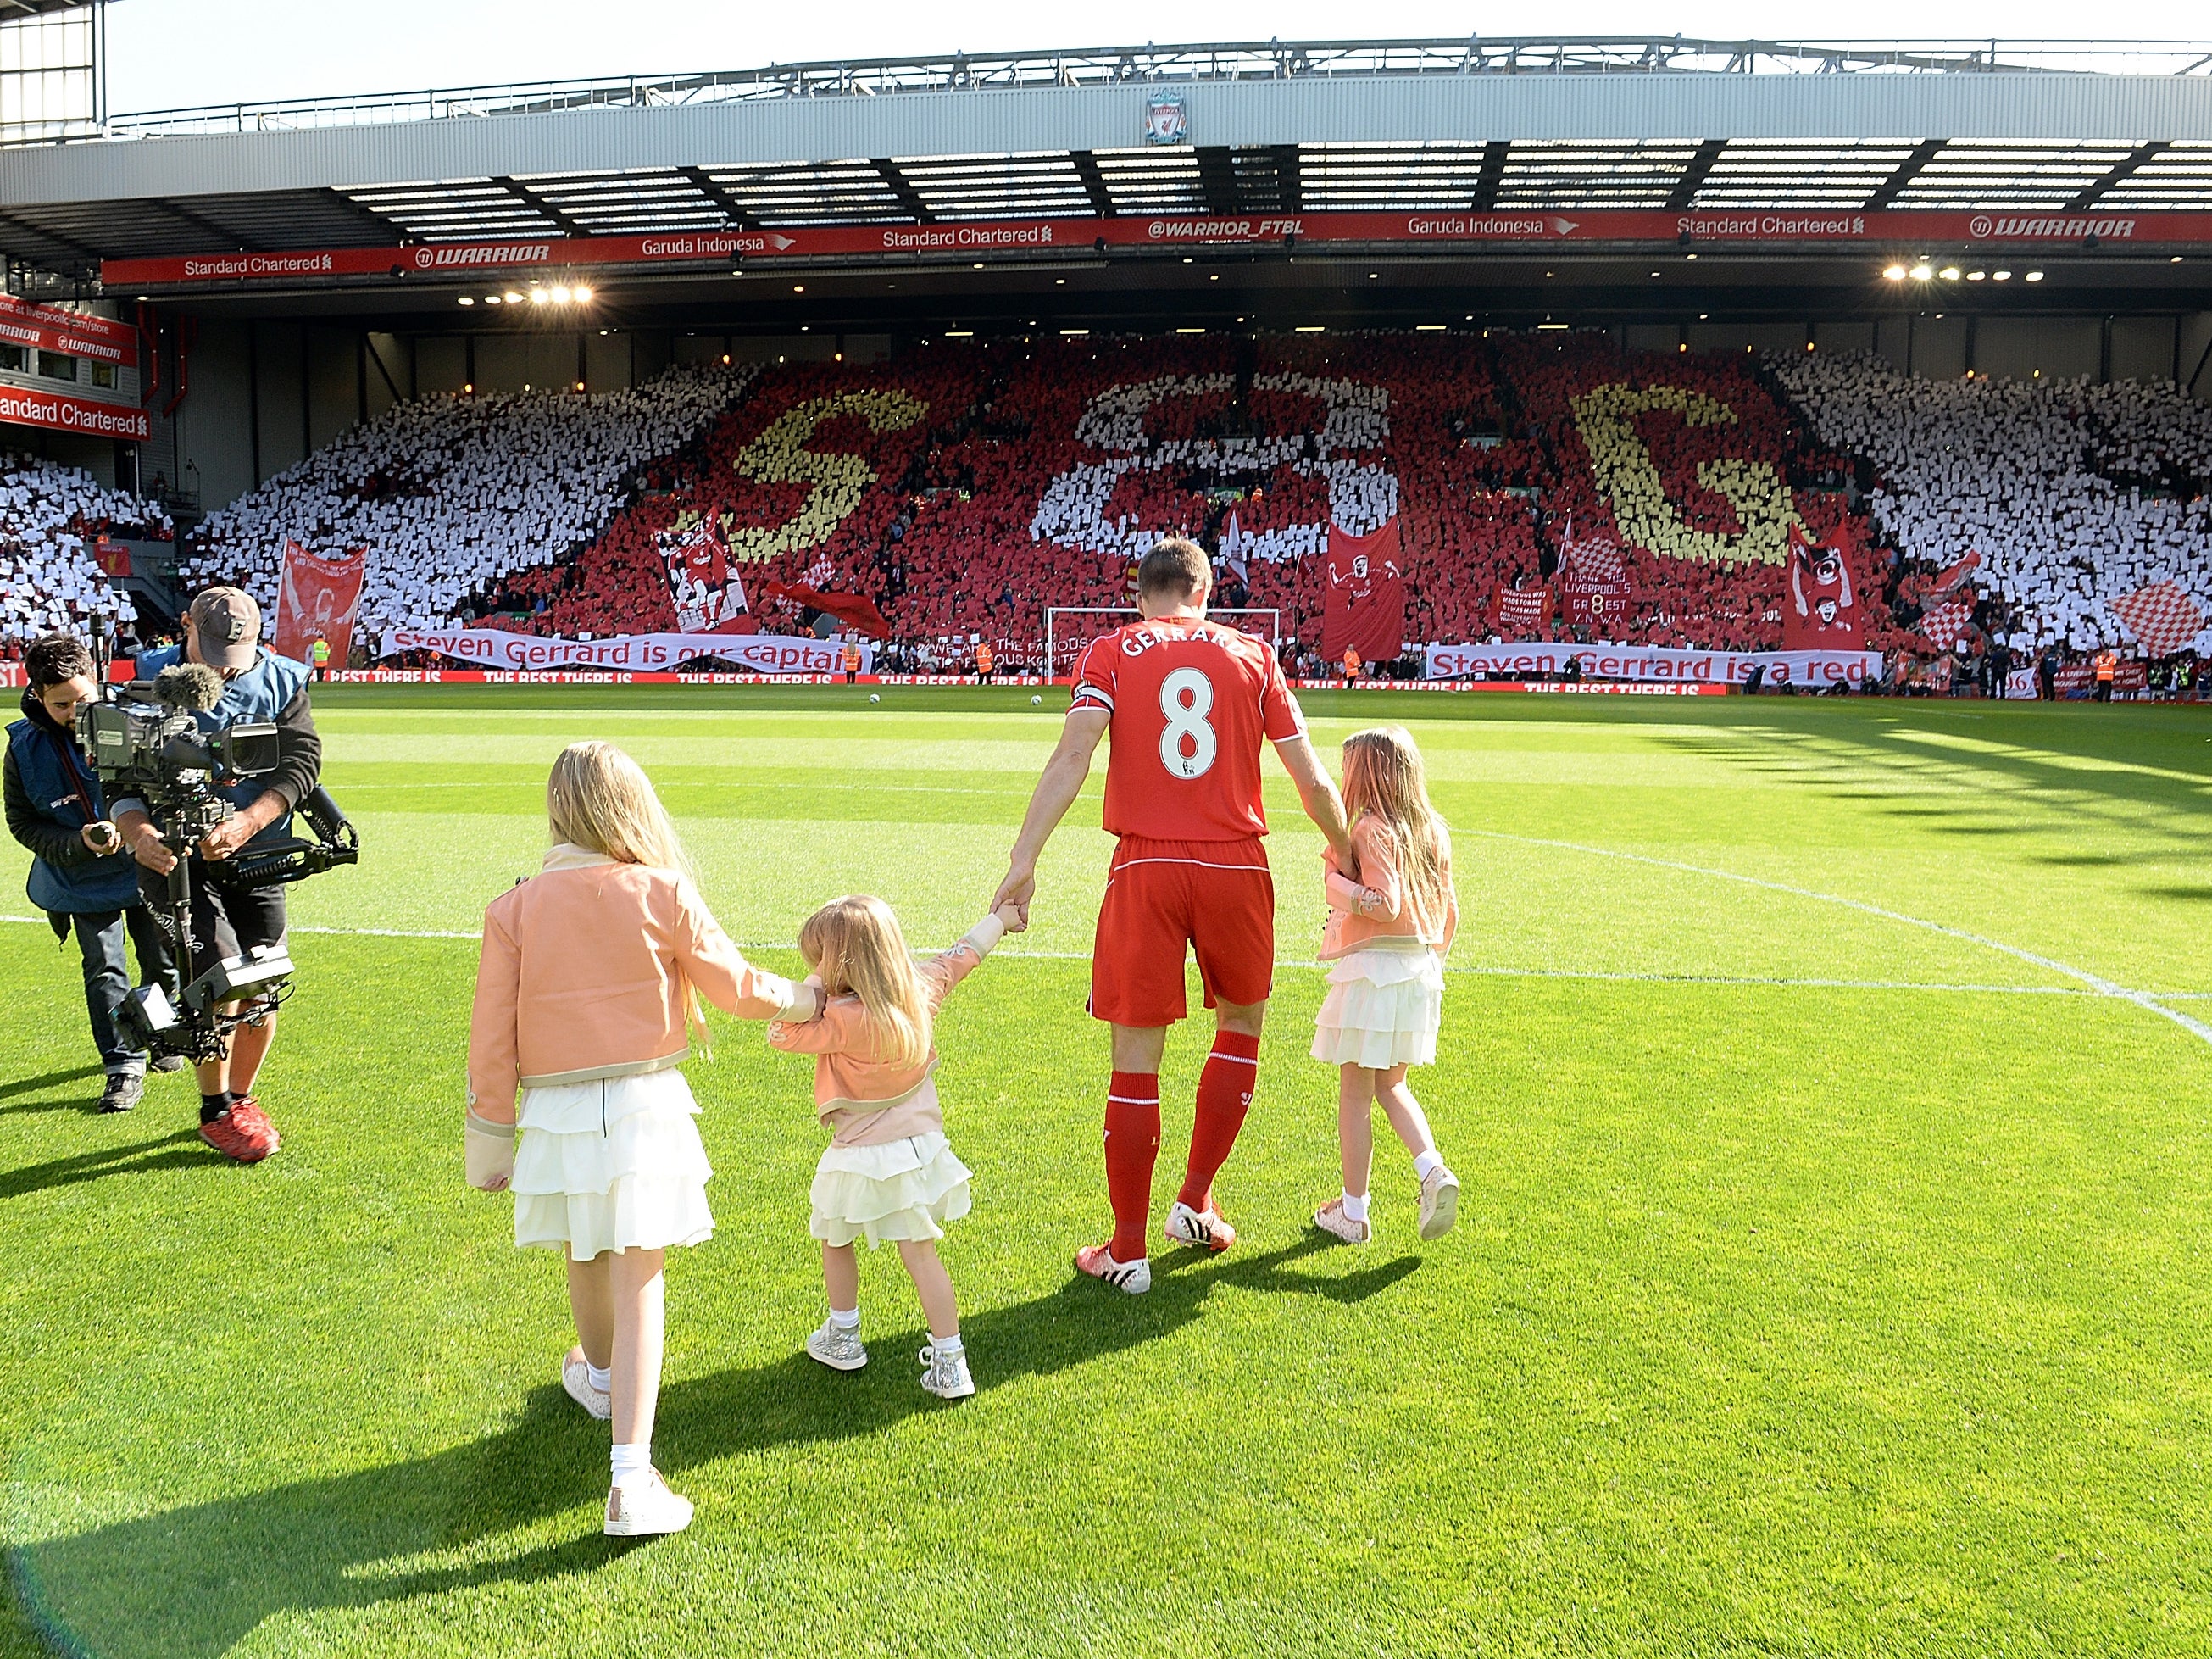 Steven Gerrard made an emotional exit from Liverpool